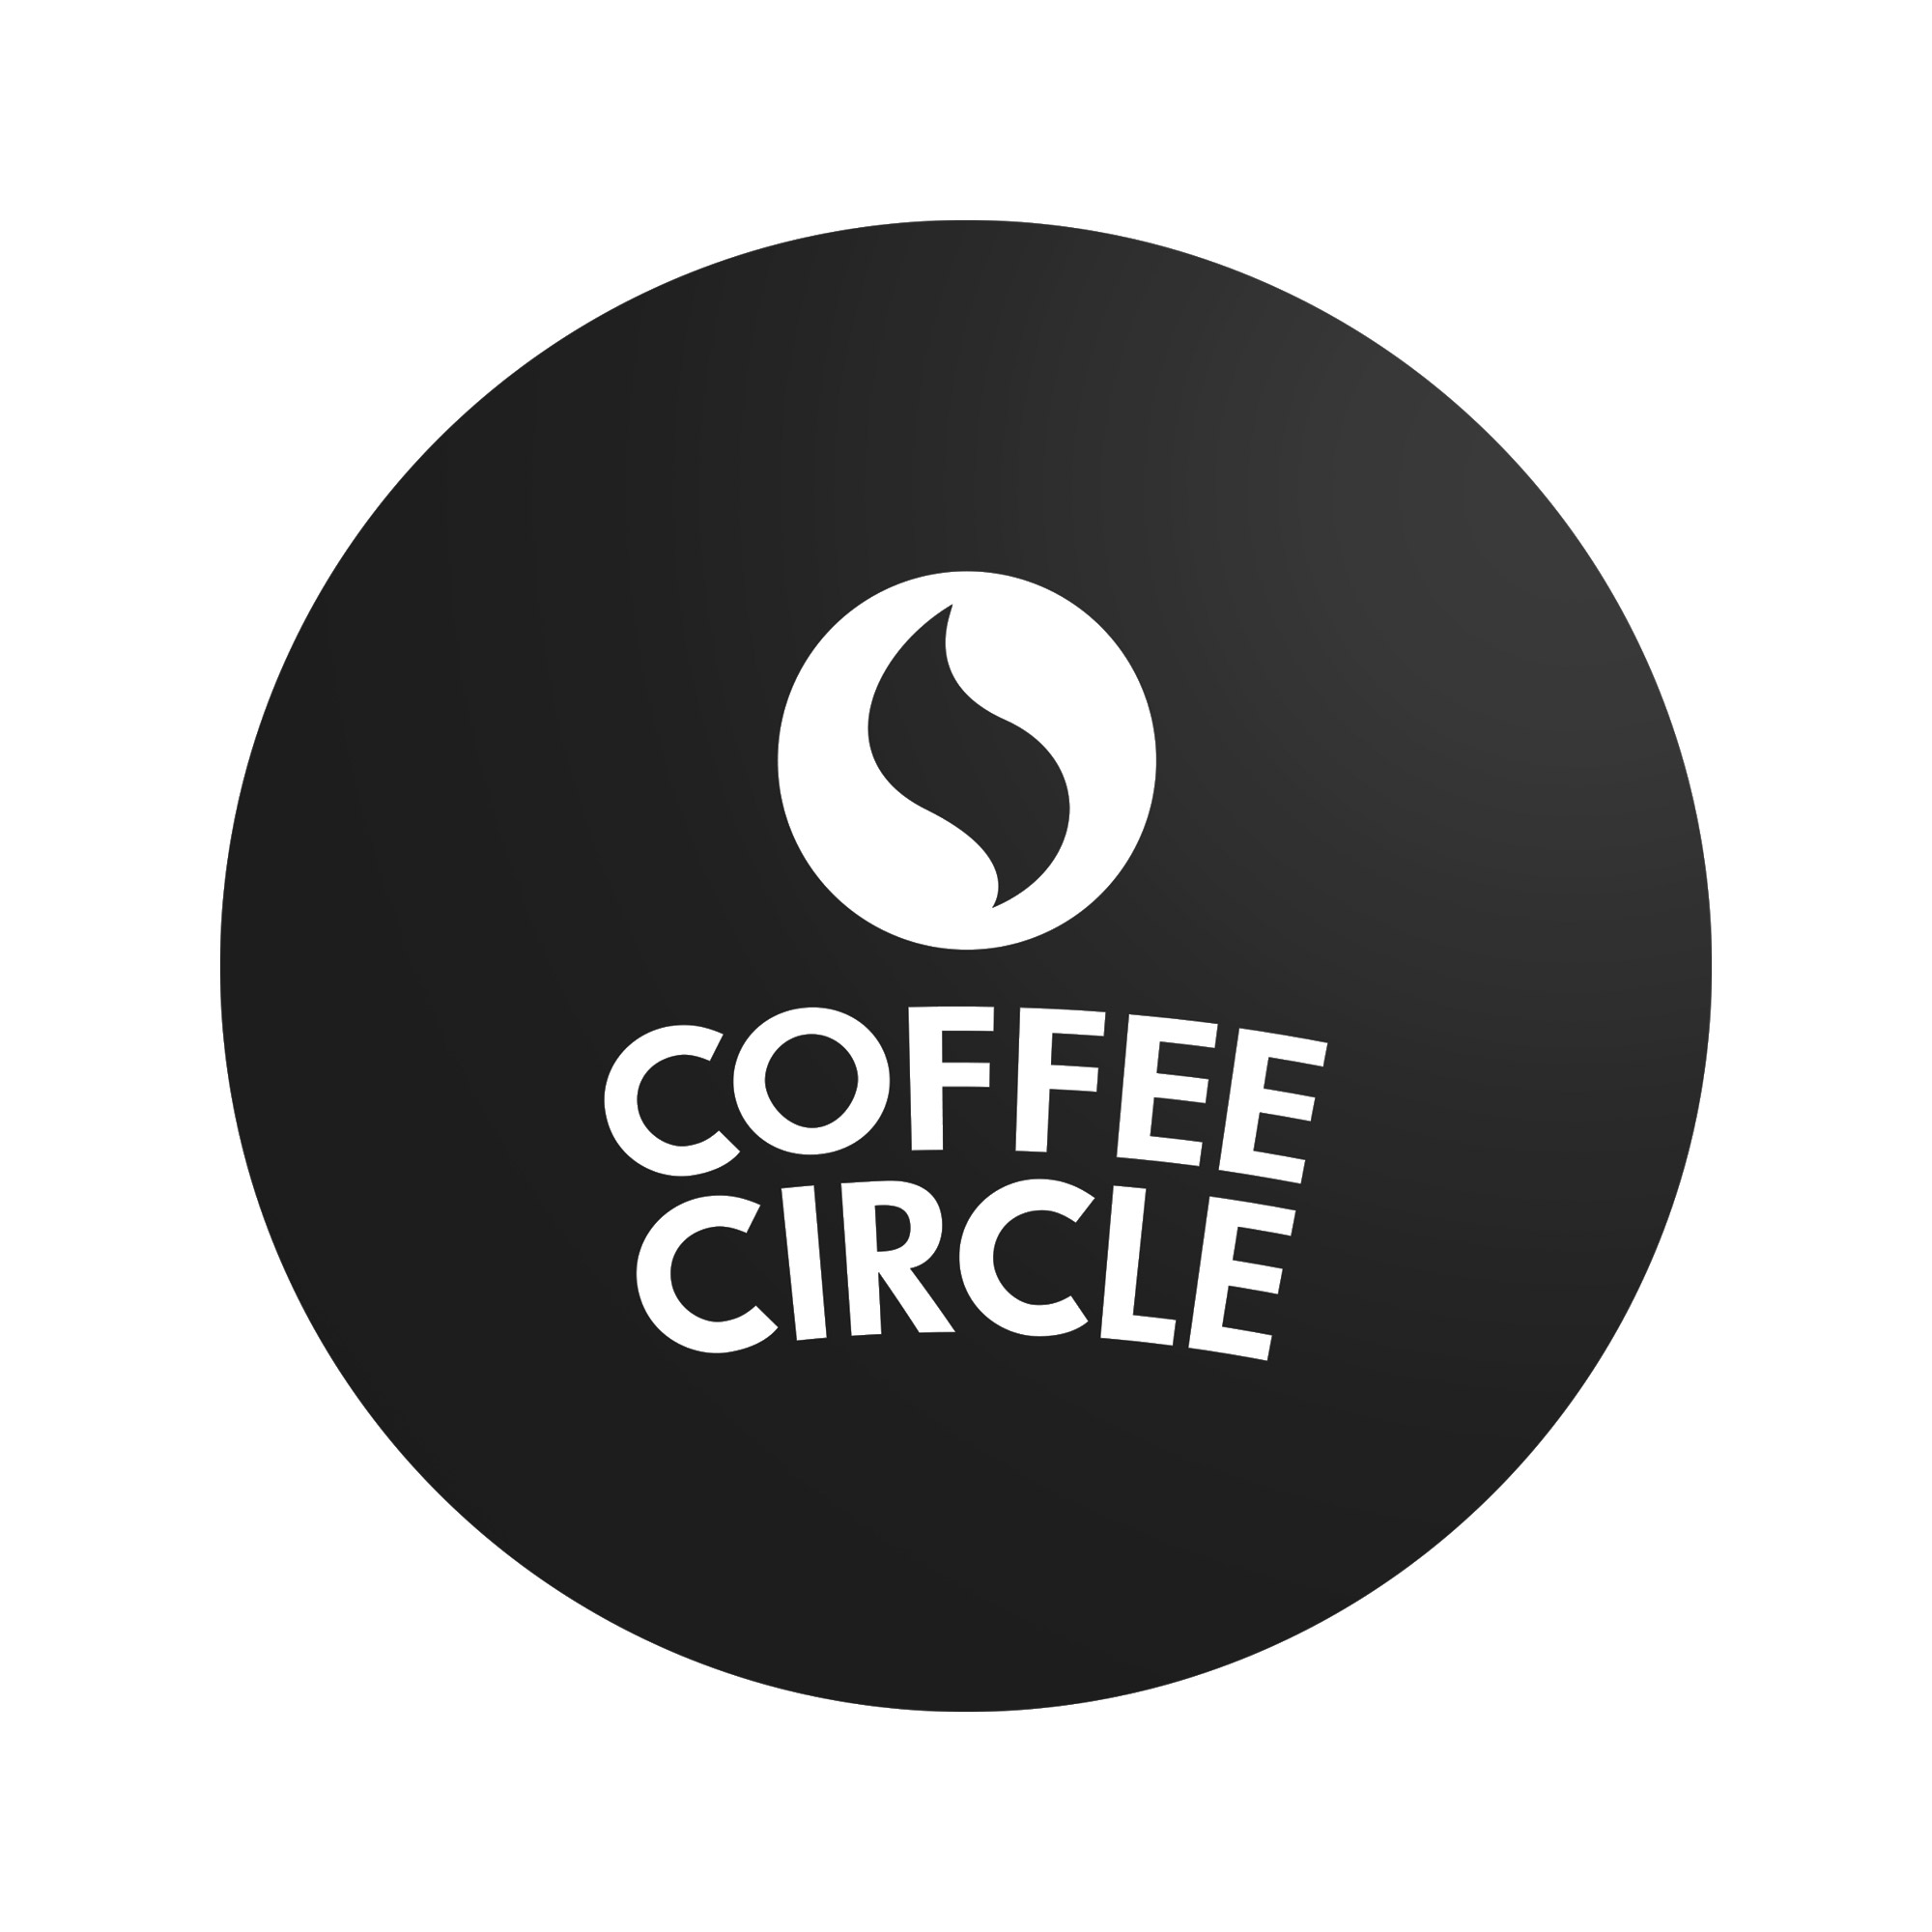  Coffee Circle  Logosticker online kaufen Coffee Circle 